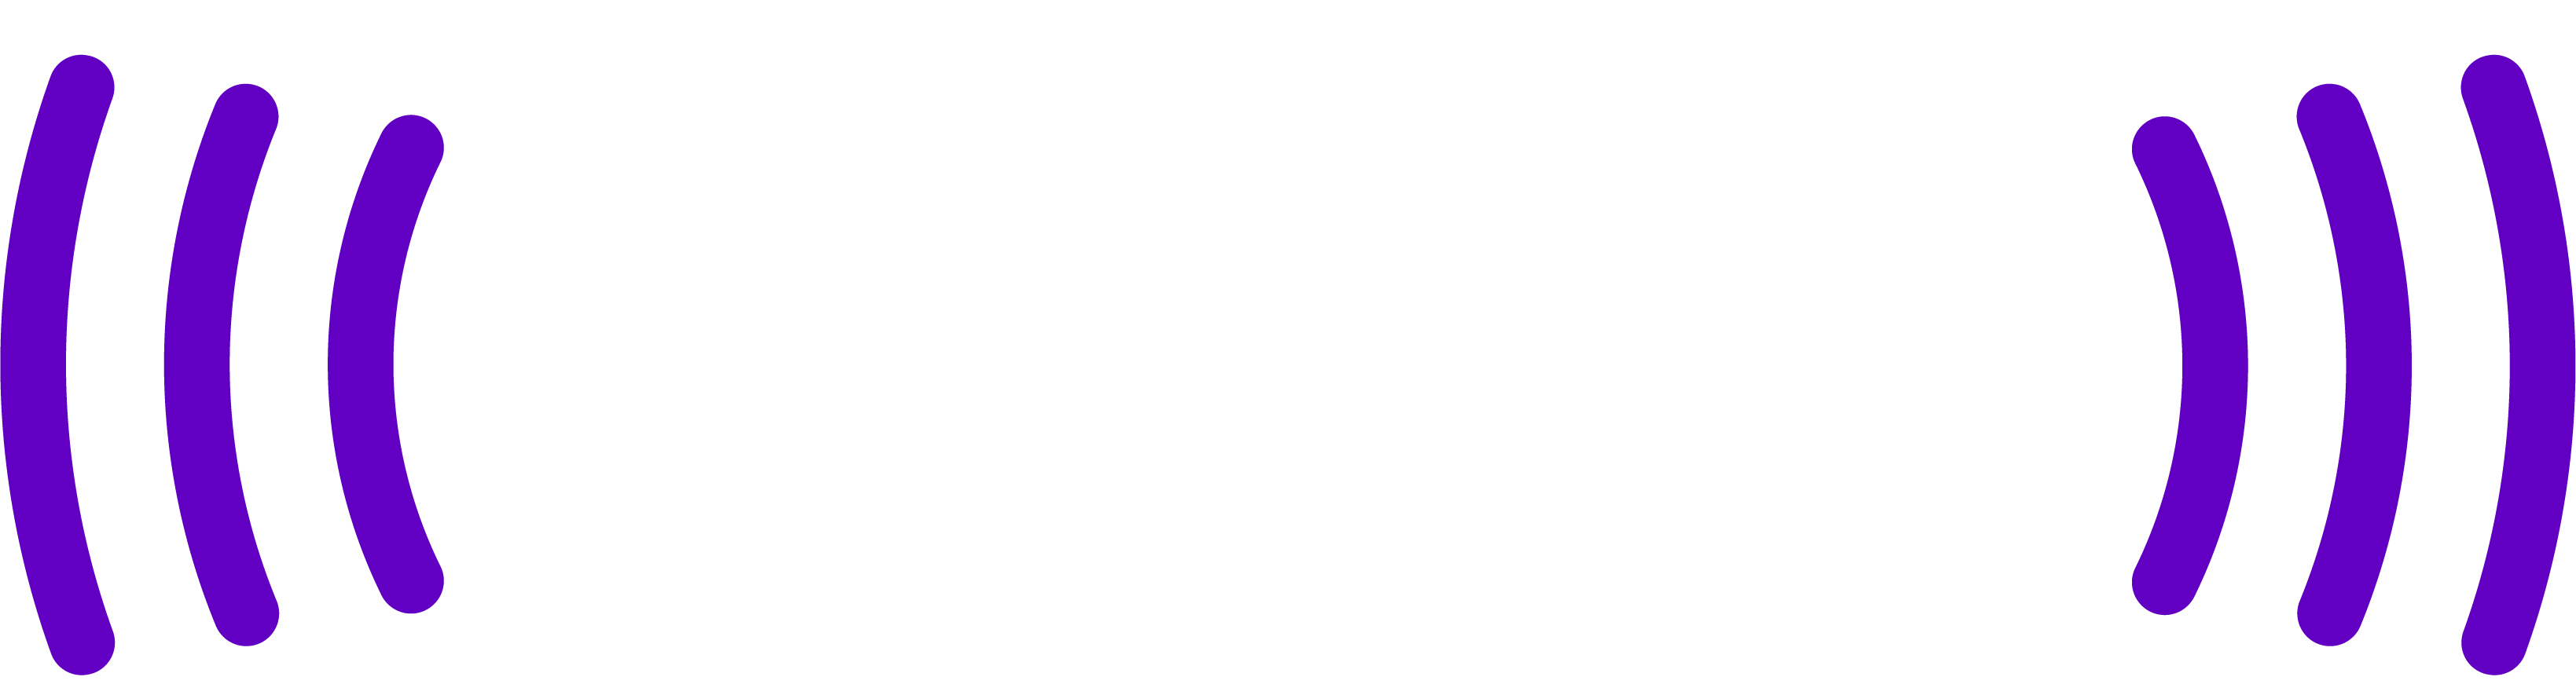 bpbd_main_logo_white